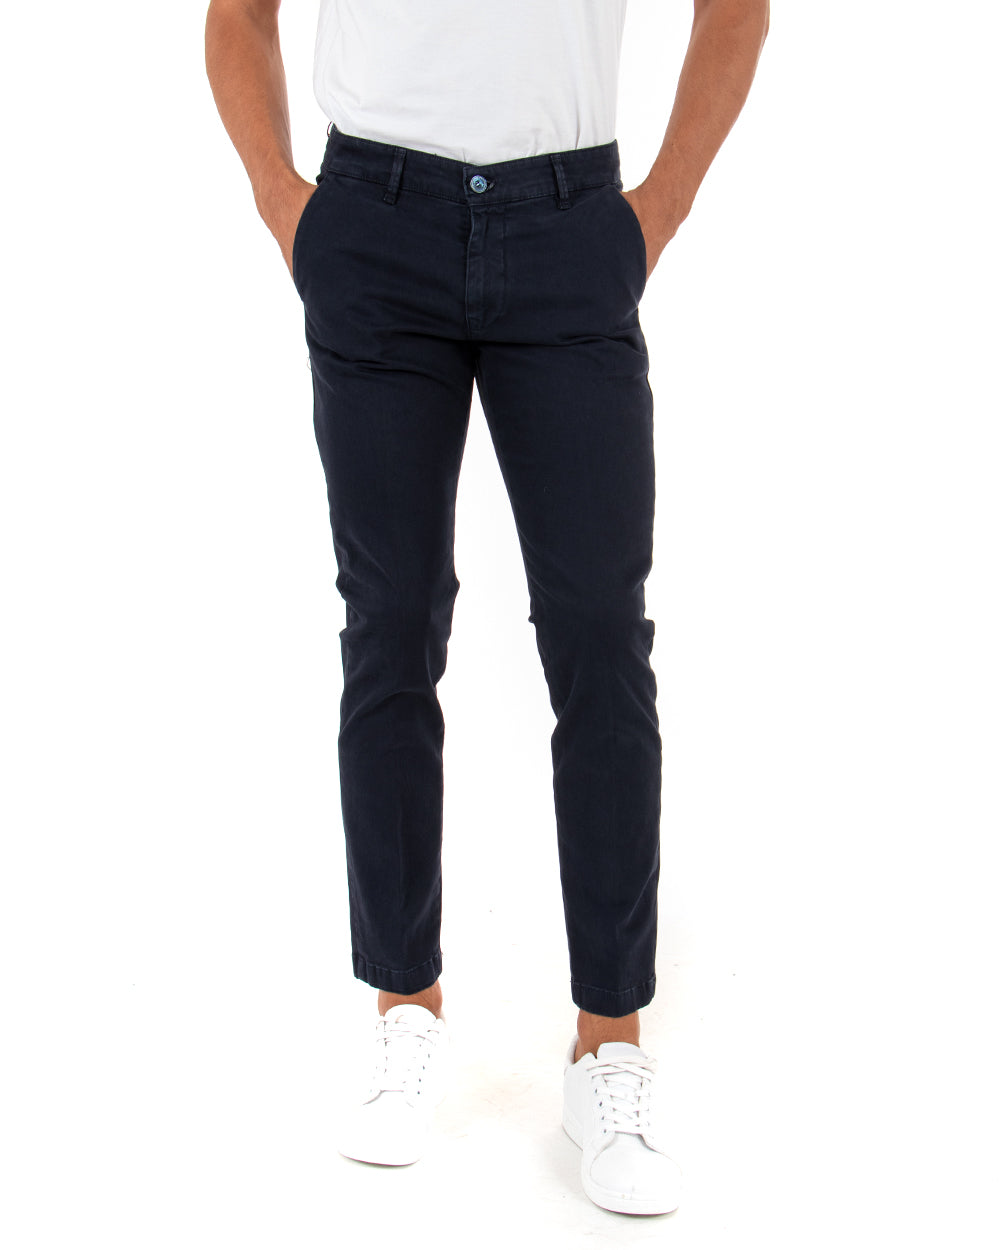 Pantaloni Uomo Tasca America Lungo Classico Slim Blu GIOSAL-P5409A